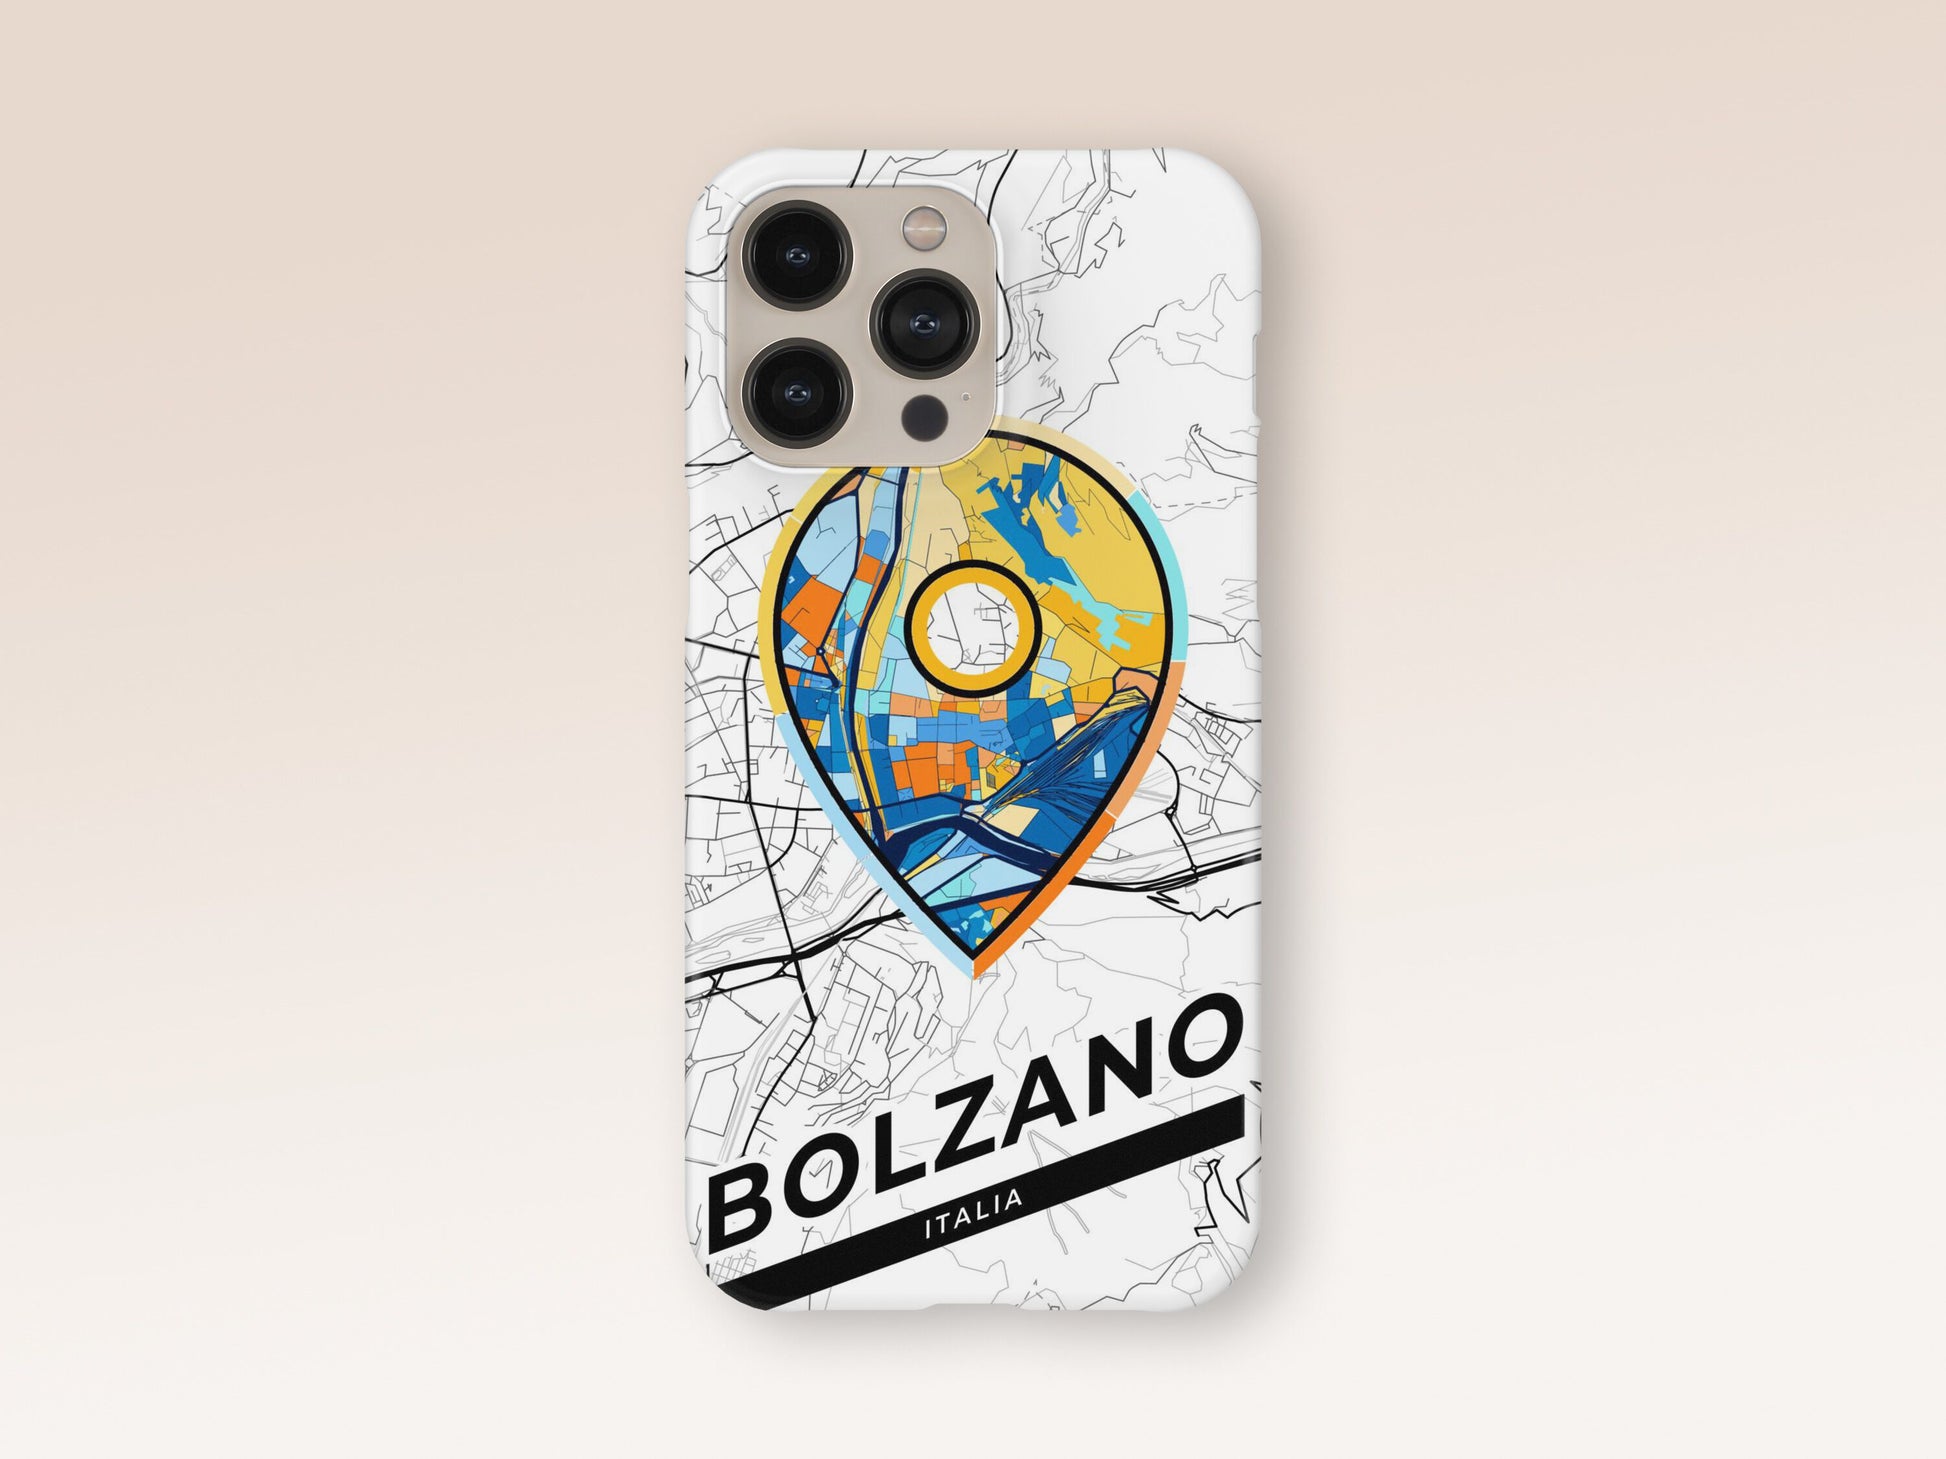 Bolzano Italy slim phone case with colorful icon. Birthday, wedding or housewarming gift. Couple match cases. 1